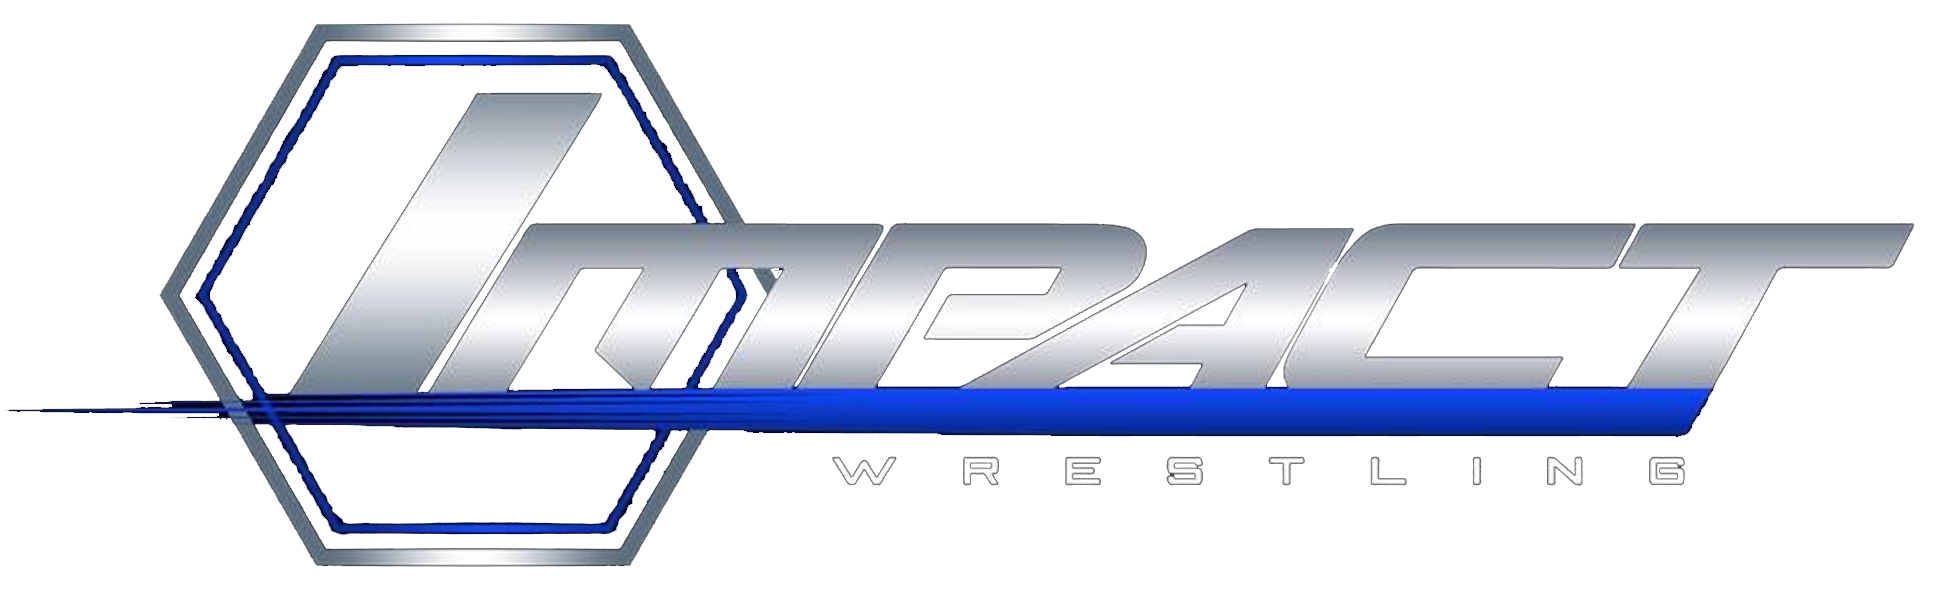 Impact Wrestling logo